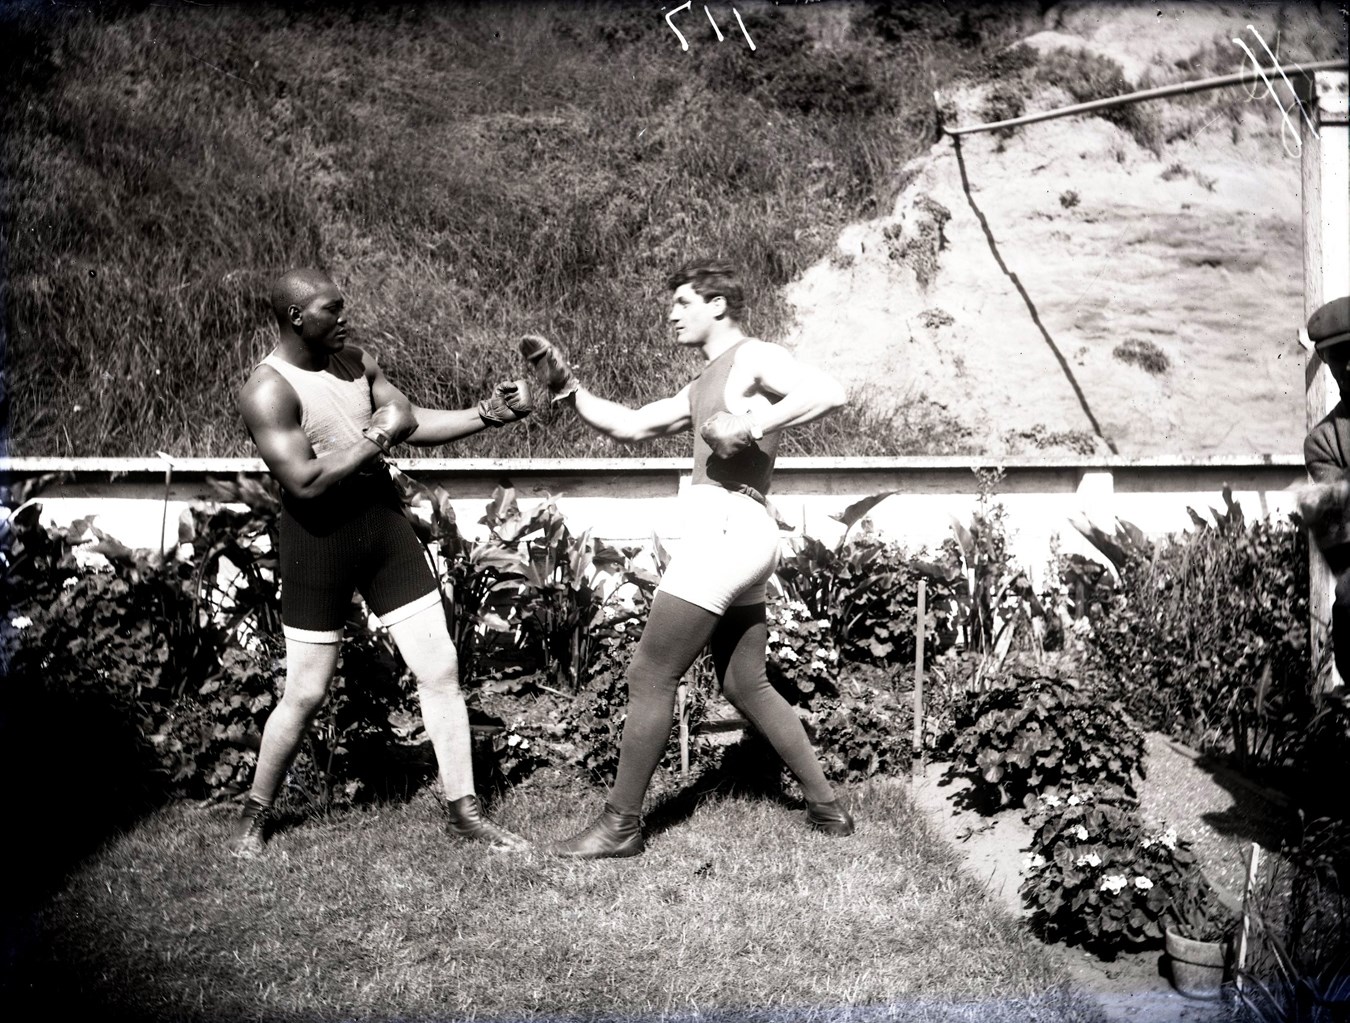 - 1909 Jack Johnson Spars w/Jewish Boxer Al Kaufman "Outside in Garden Setting" Type I Glass Plate Negative by Dana Studios